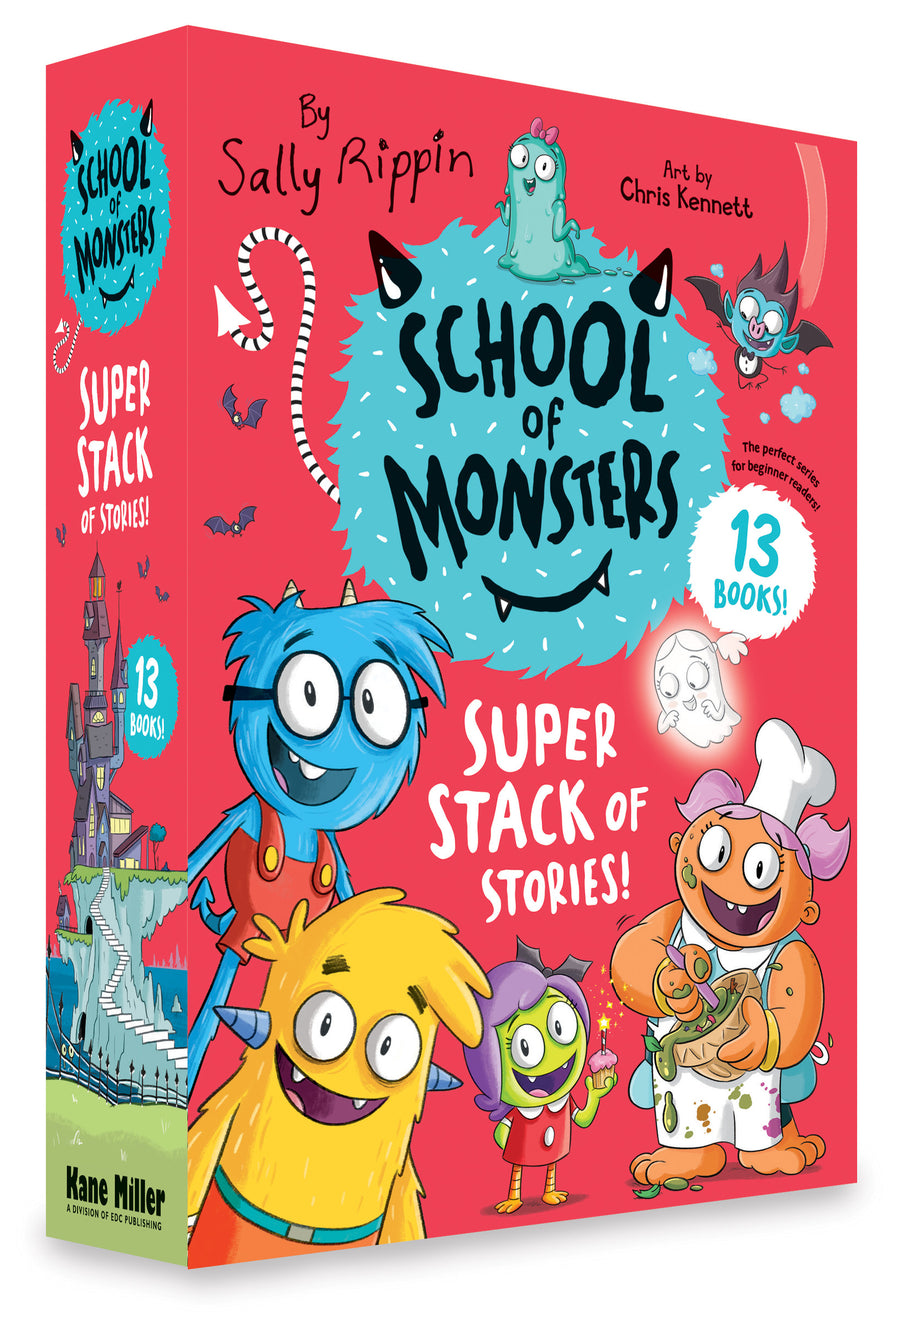 School of Monsters Super Stack of Stories!